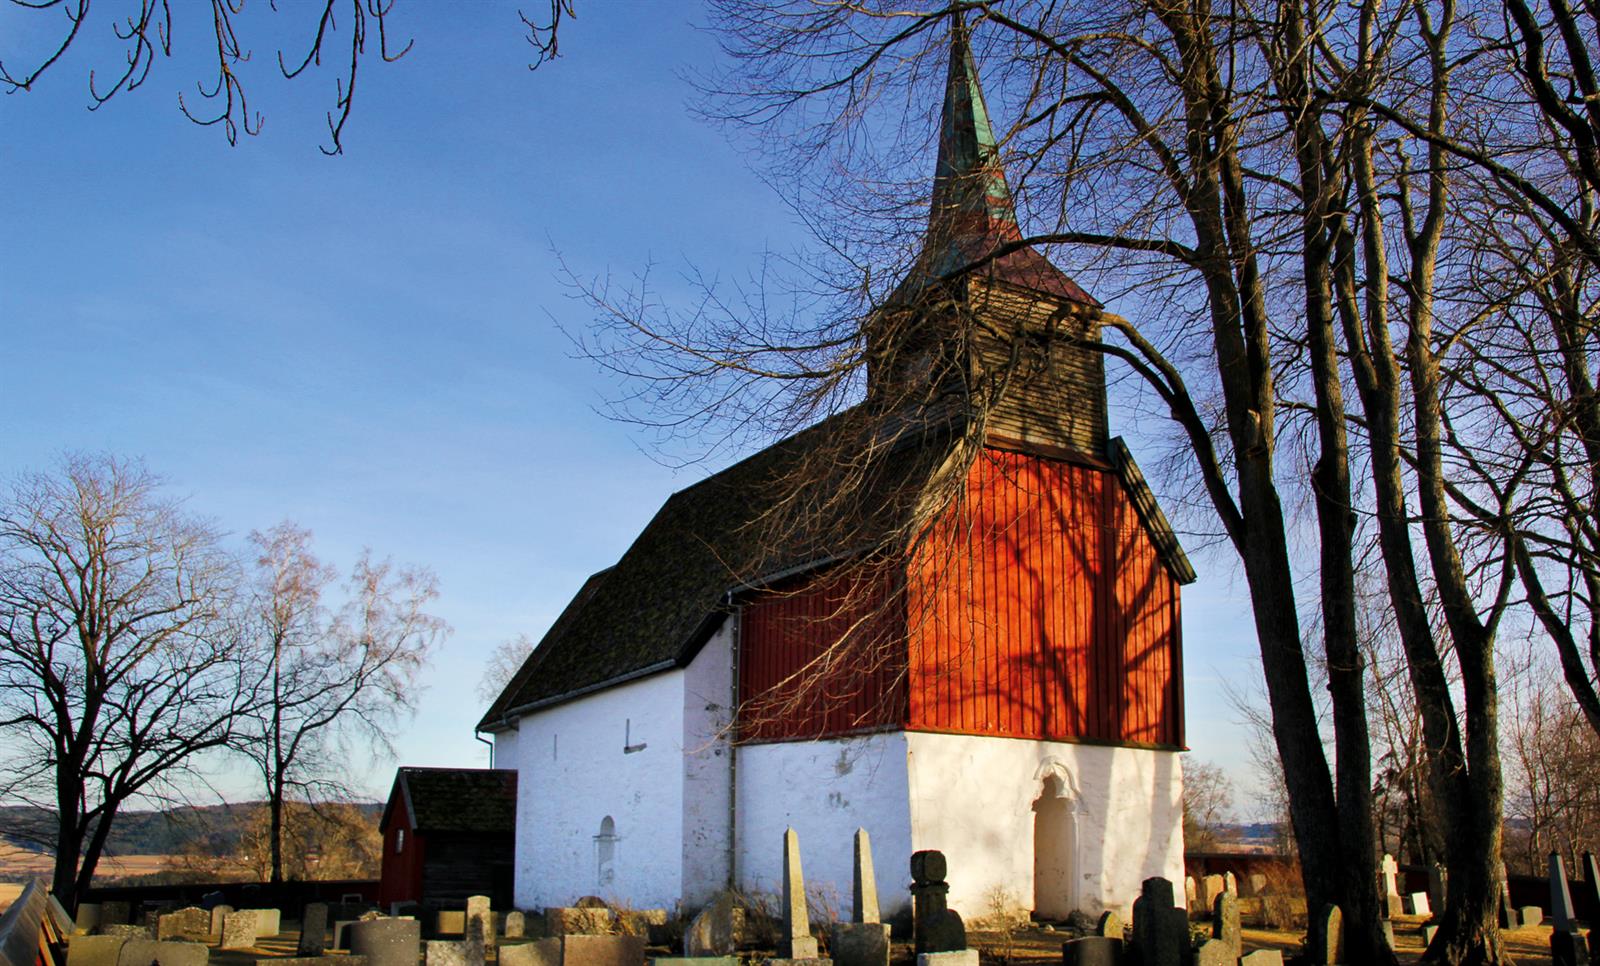 Hustad church -  a medieval church in Inderøy